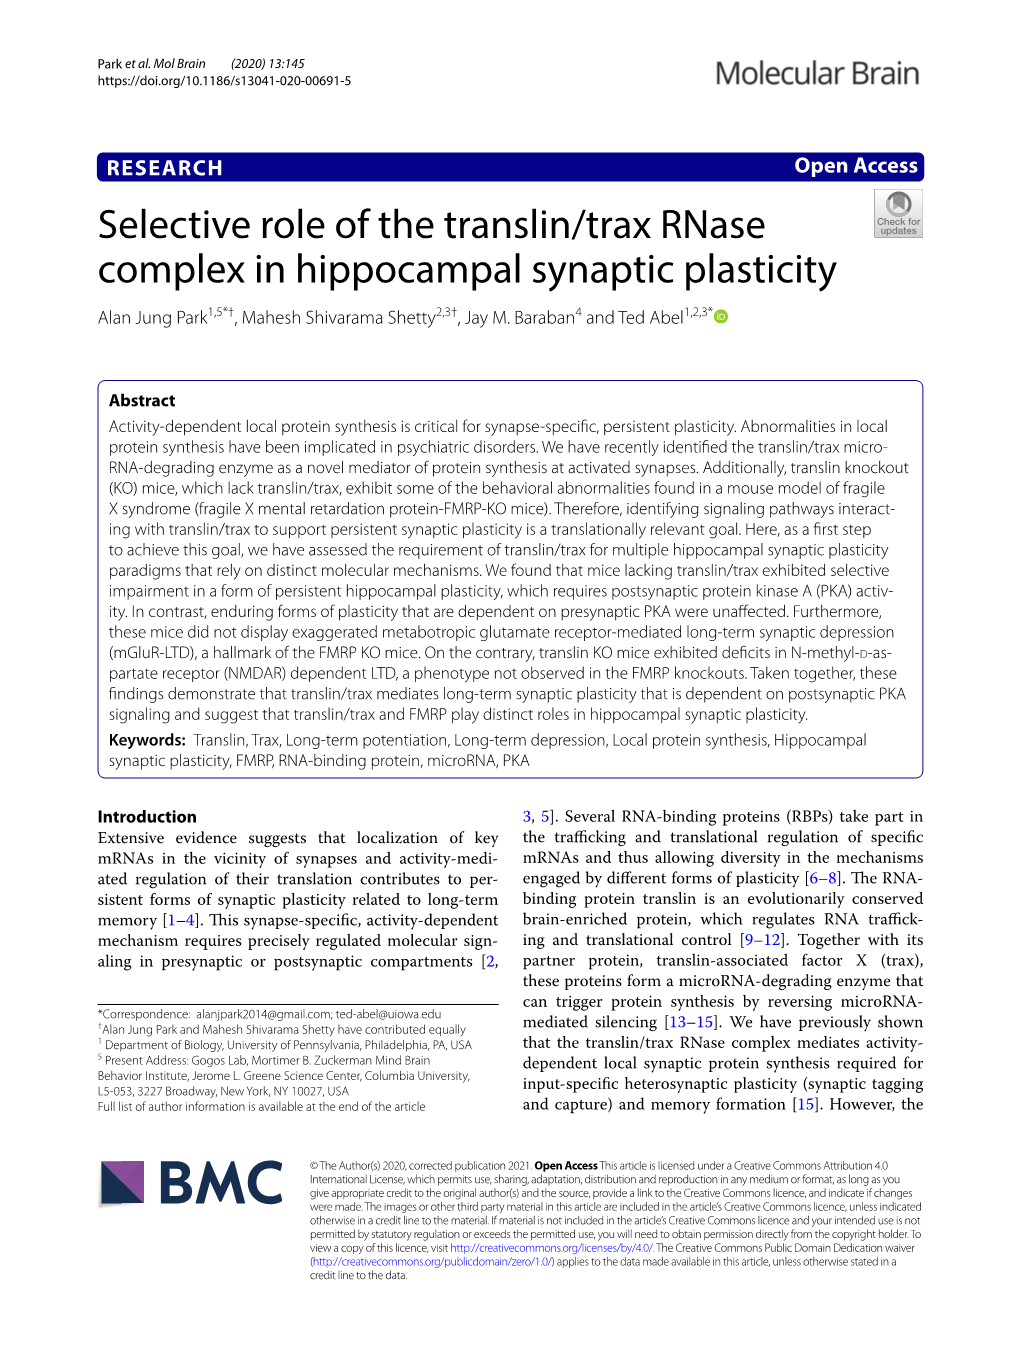 Selective Role of the Translin/Trax Rnase Complex in Hippocampal Synaptic Plasticity Alan Jung Park1,5*†, Mahesh Shivarama Shetty2,3†, Jay M